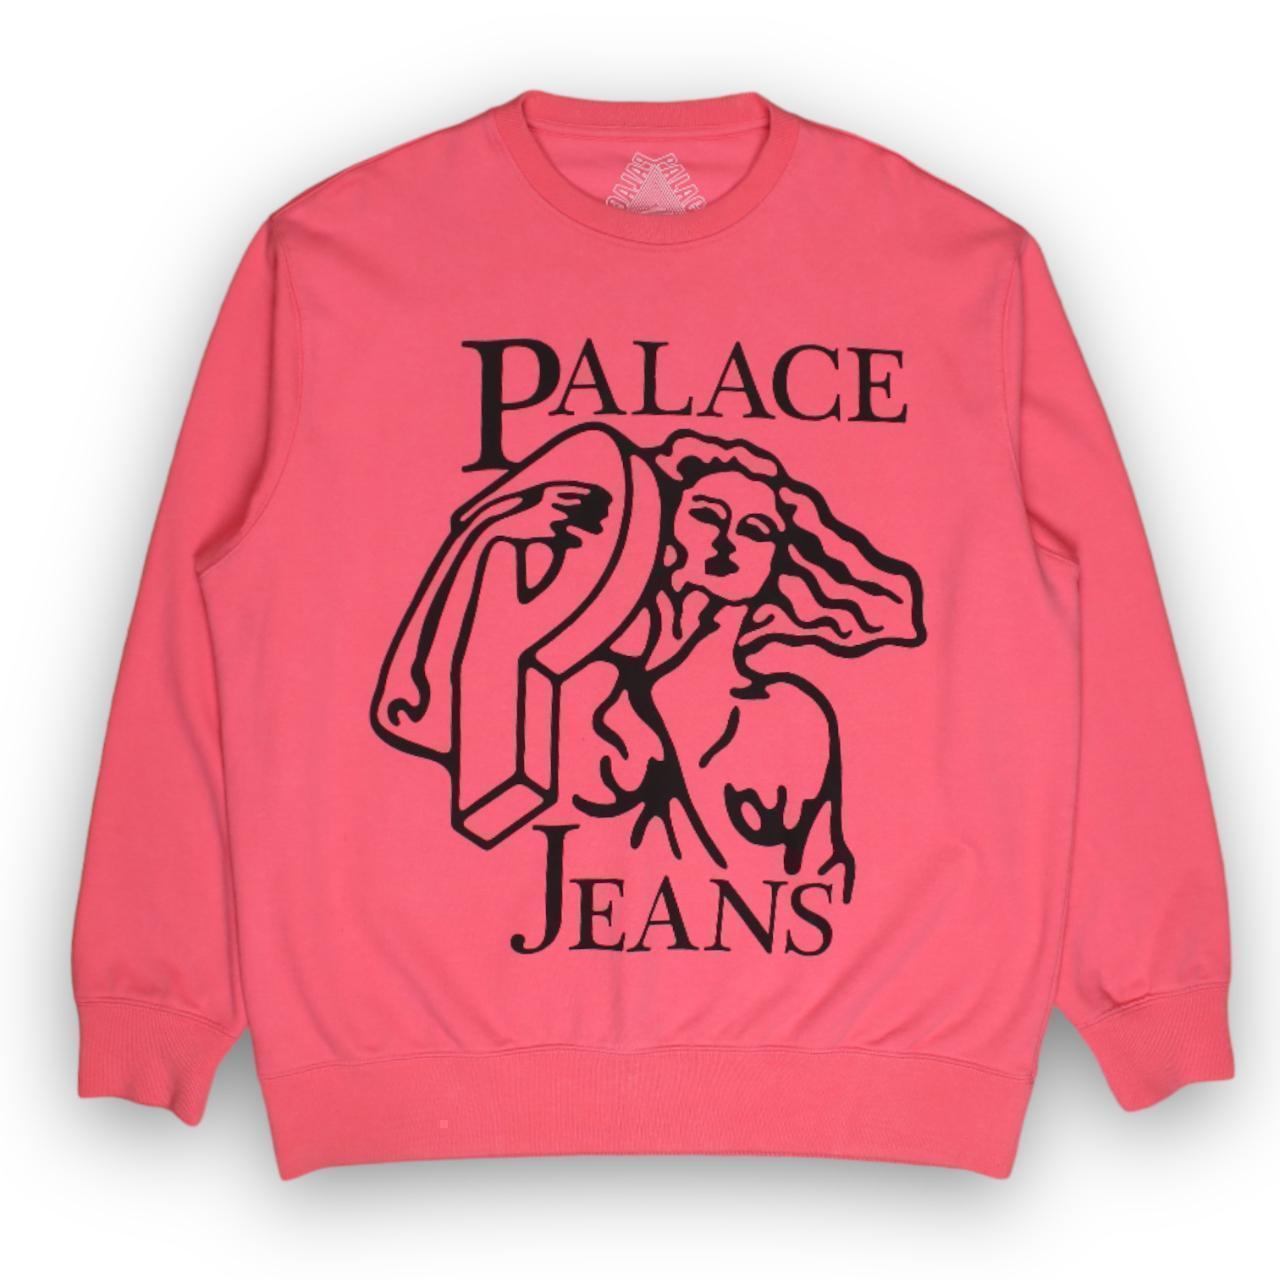 Palace P Jeans Jumper Sweatshirt, XL, Pink, Great...